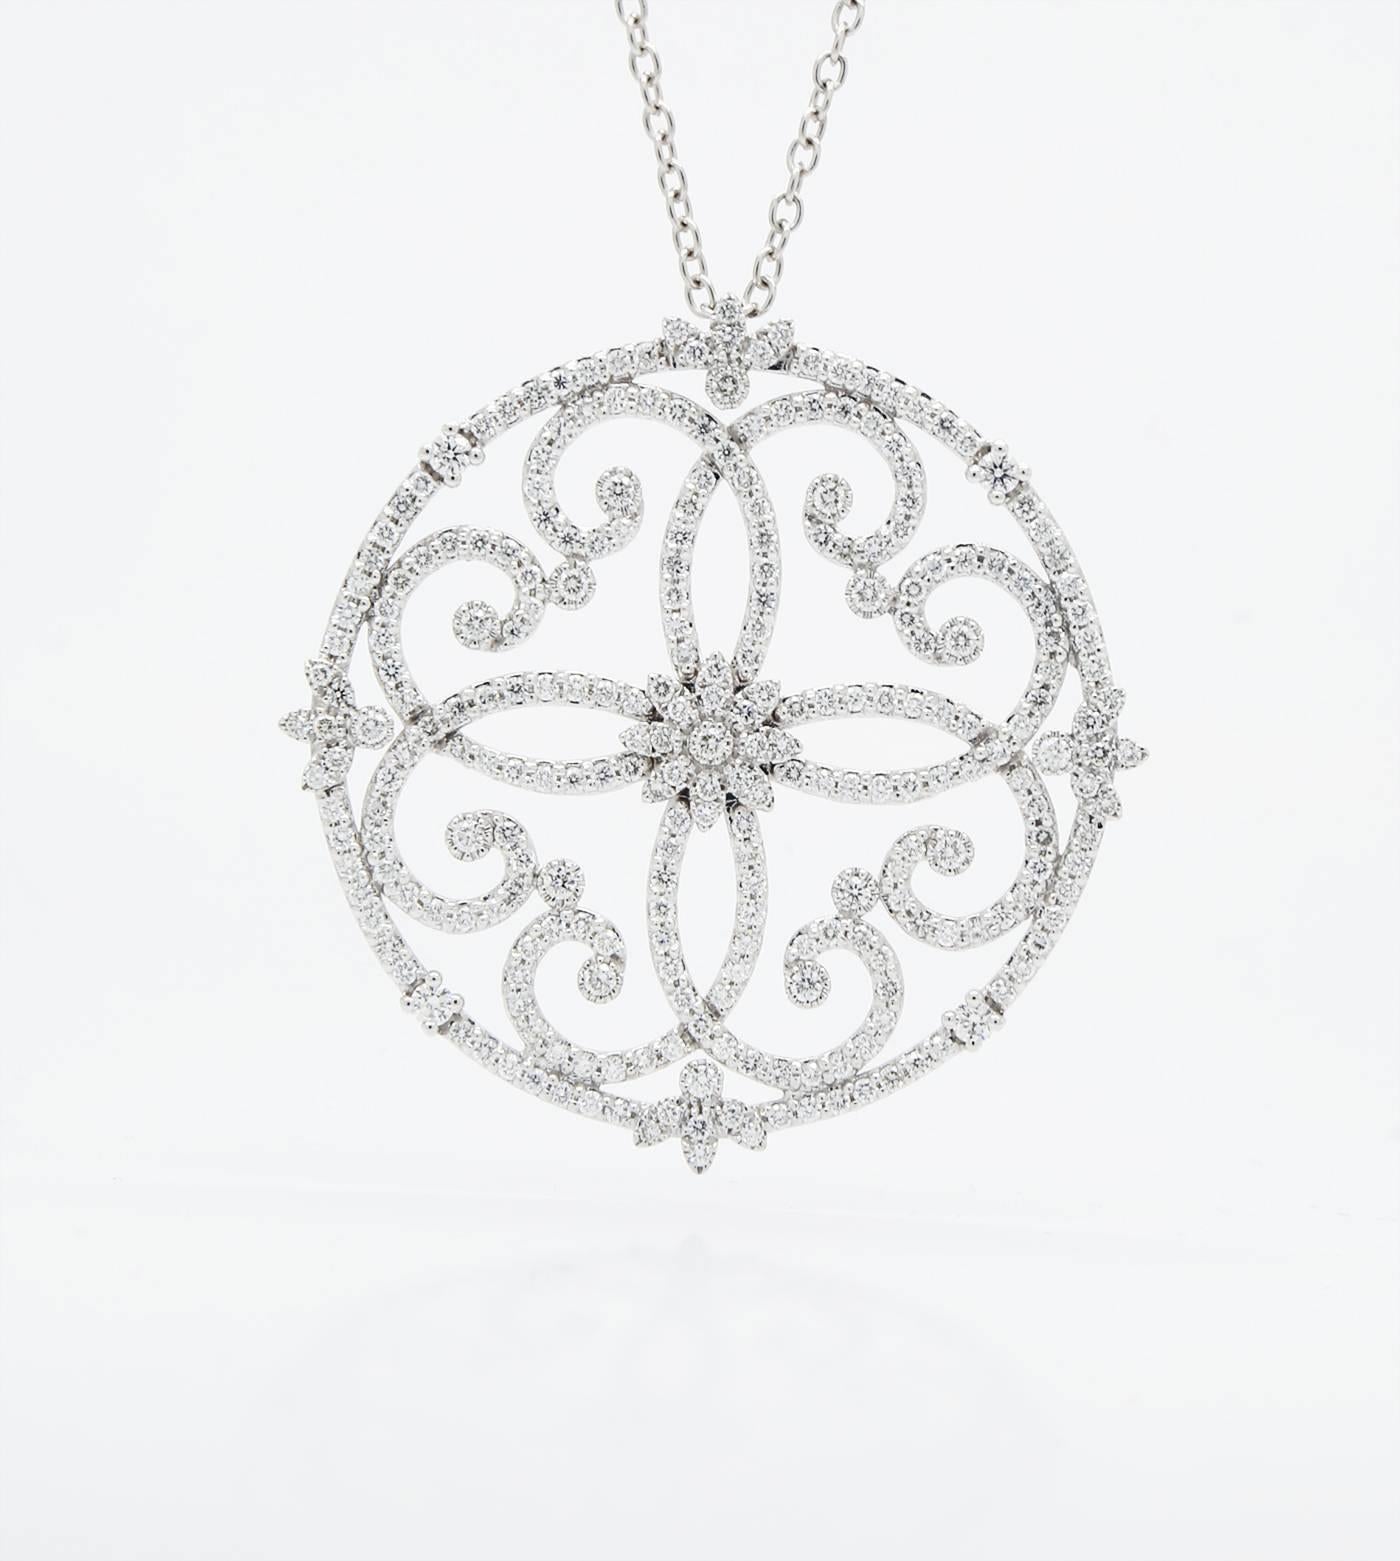 Ferrucci & Co. Diamond Necklace in 18 Karat White Gold, Handmade in Italy 1